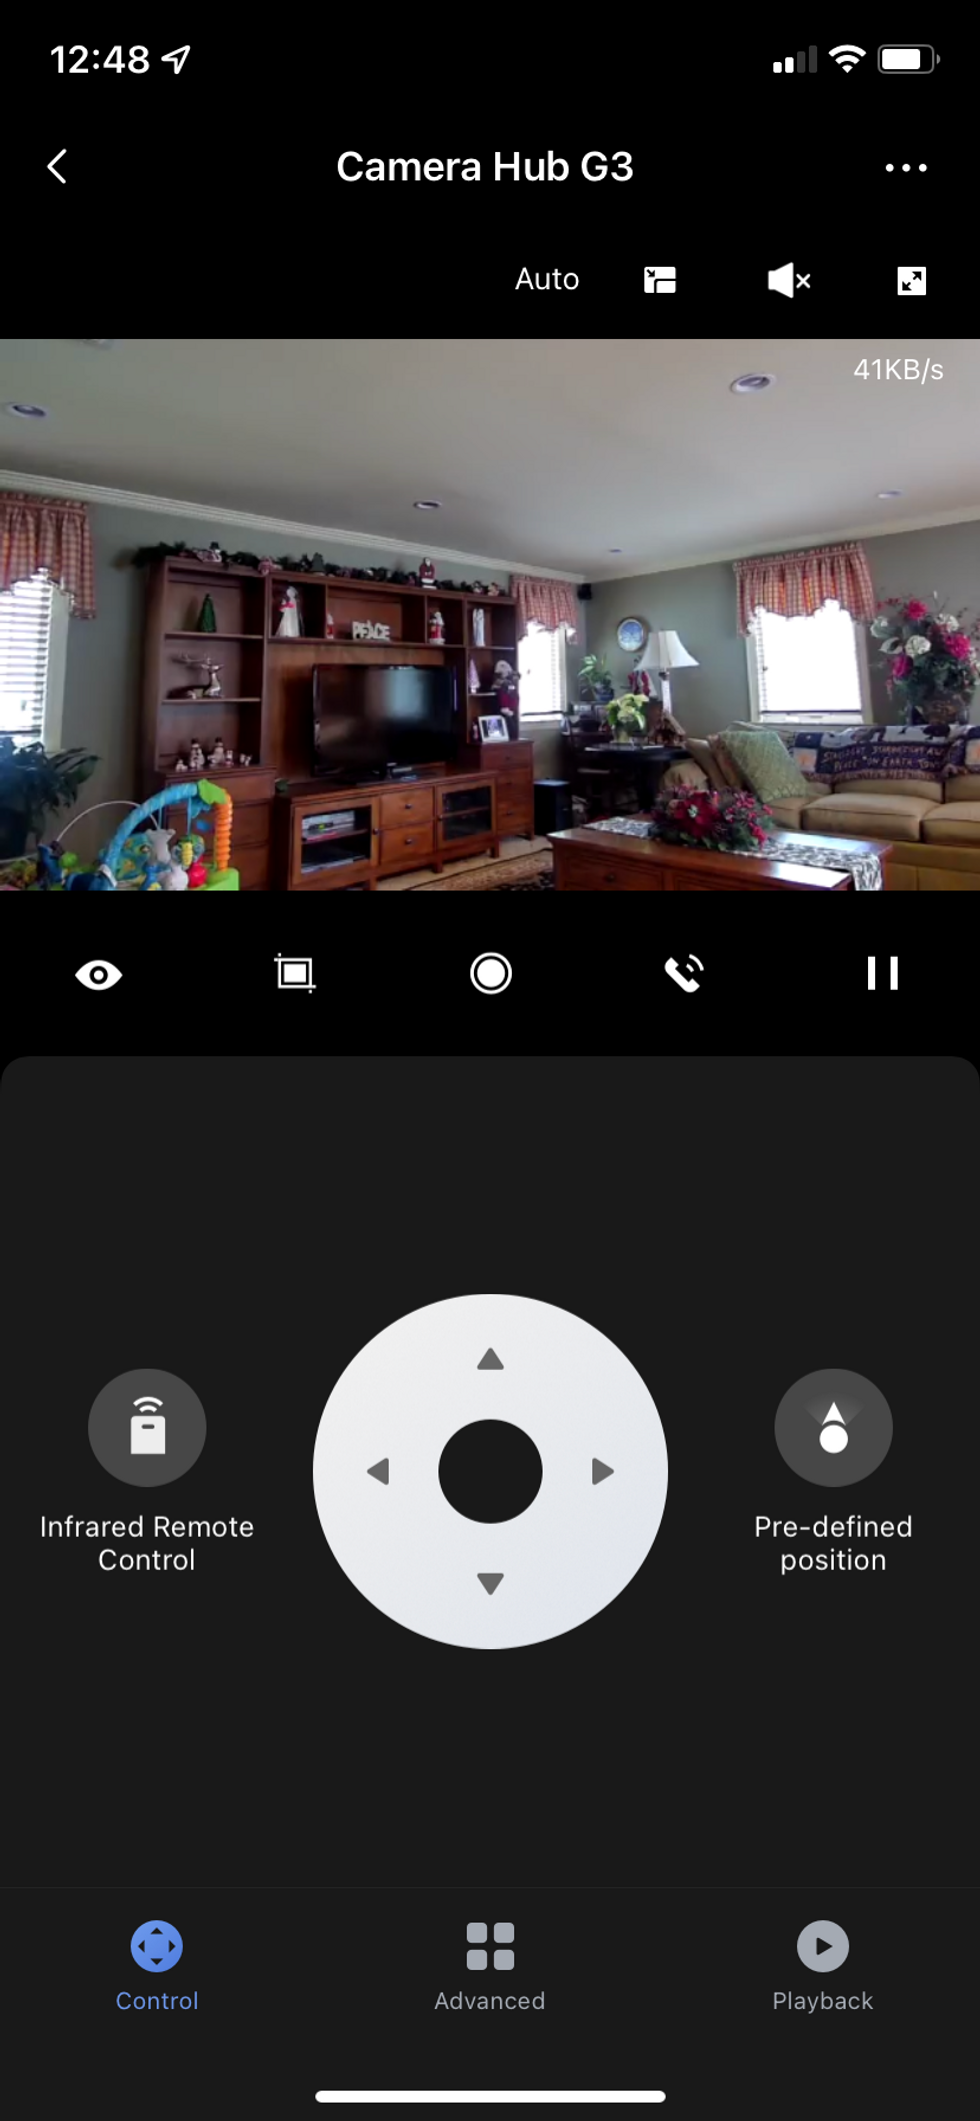 Photo of home screen in Aqara app for camera